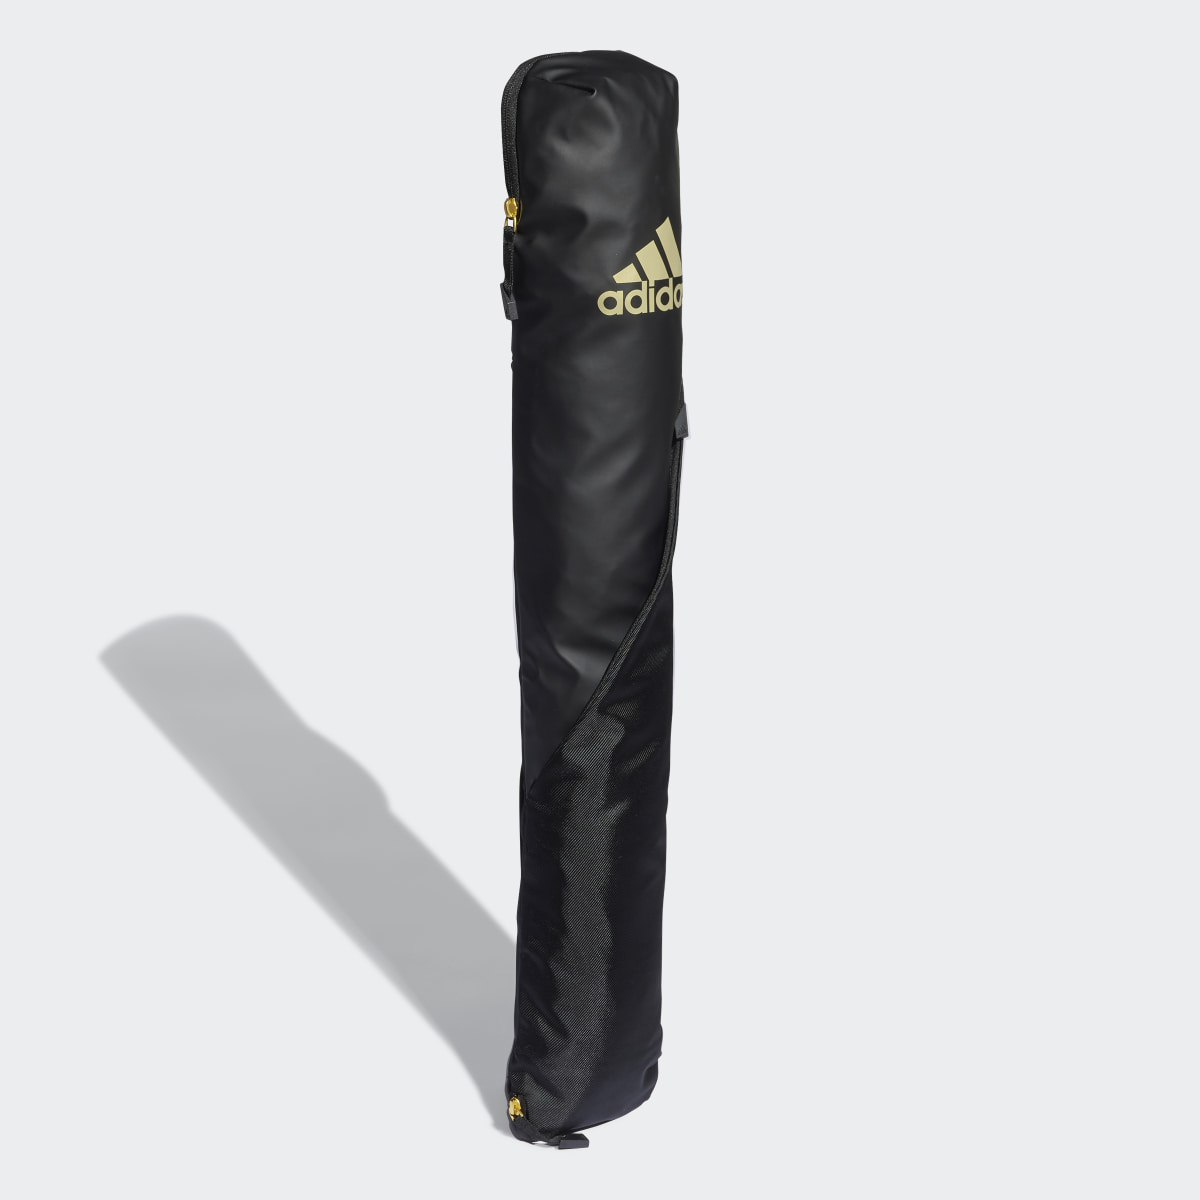 Adidas VS.6 Black/Gold Stick Sleeve. 4